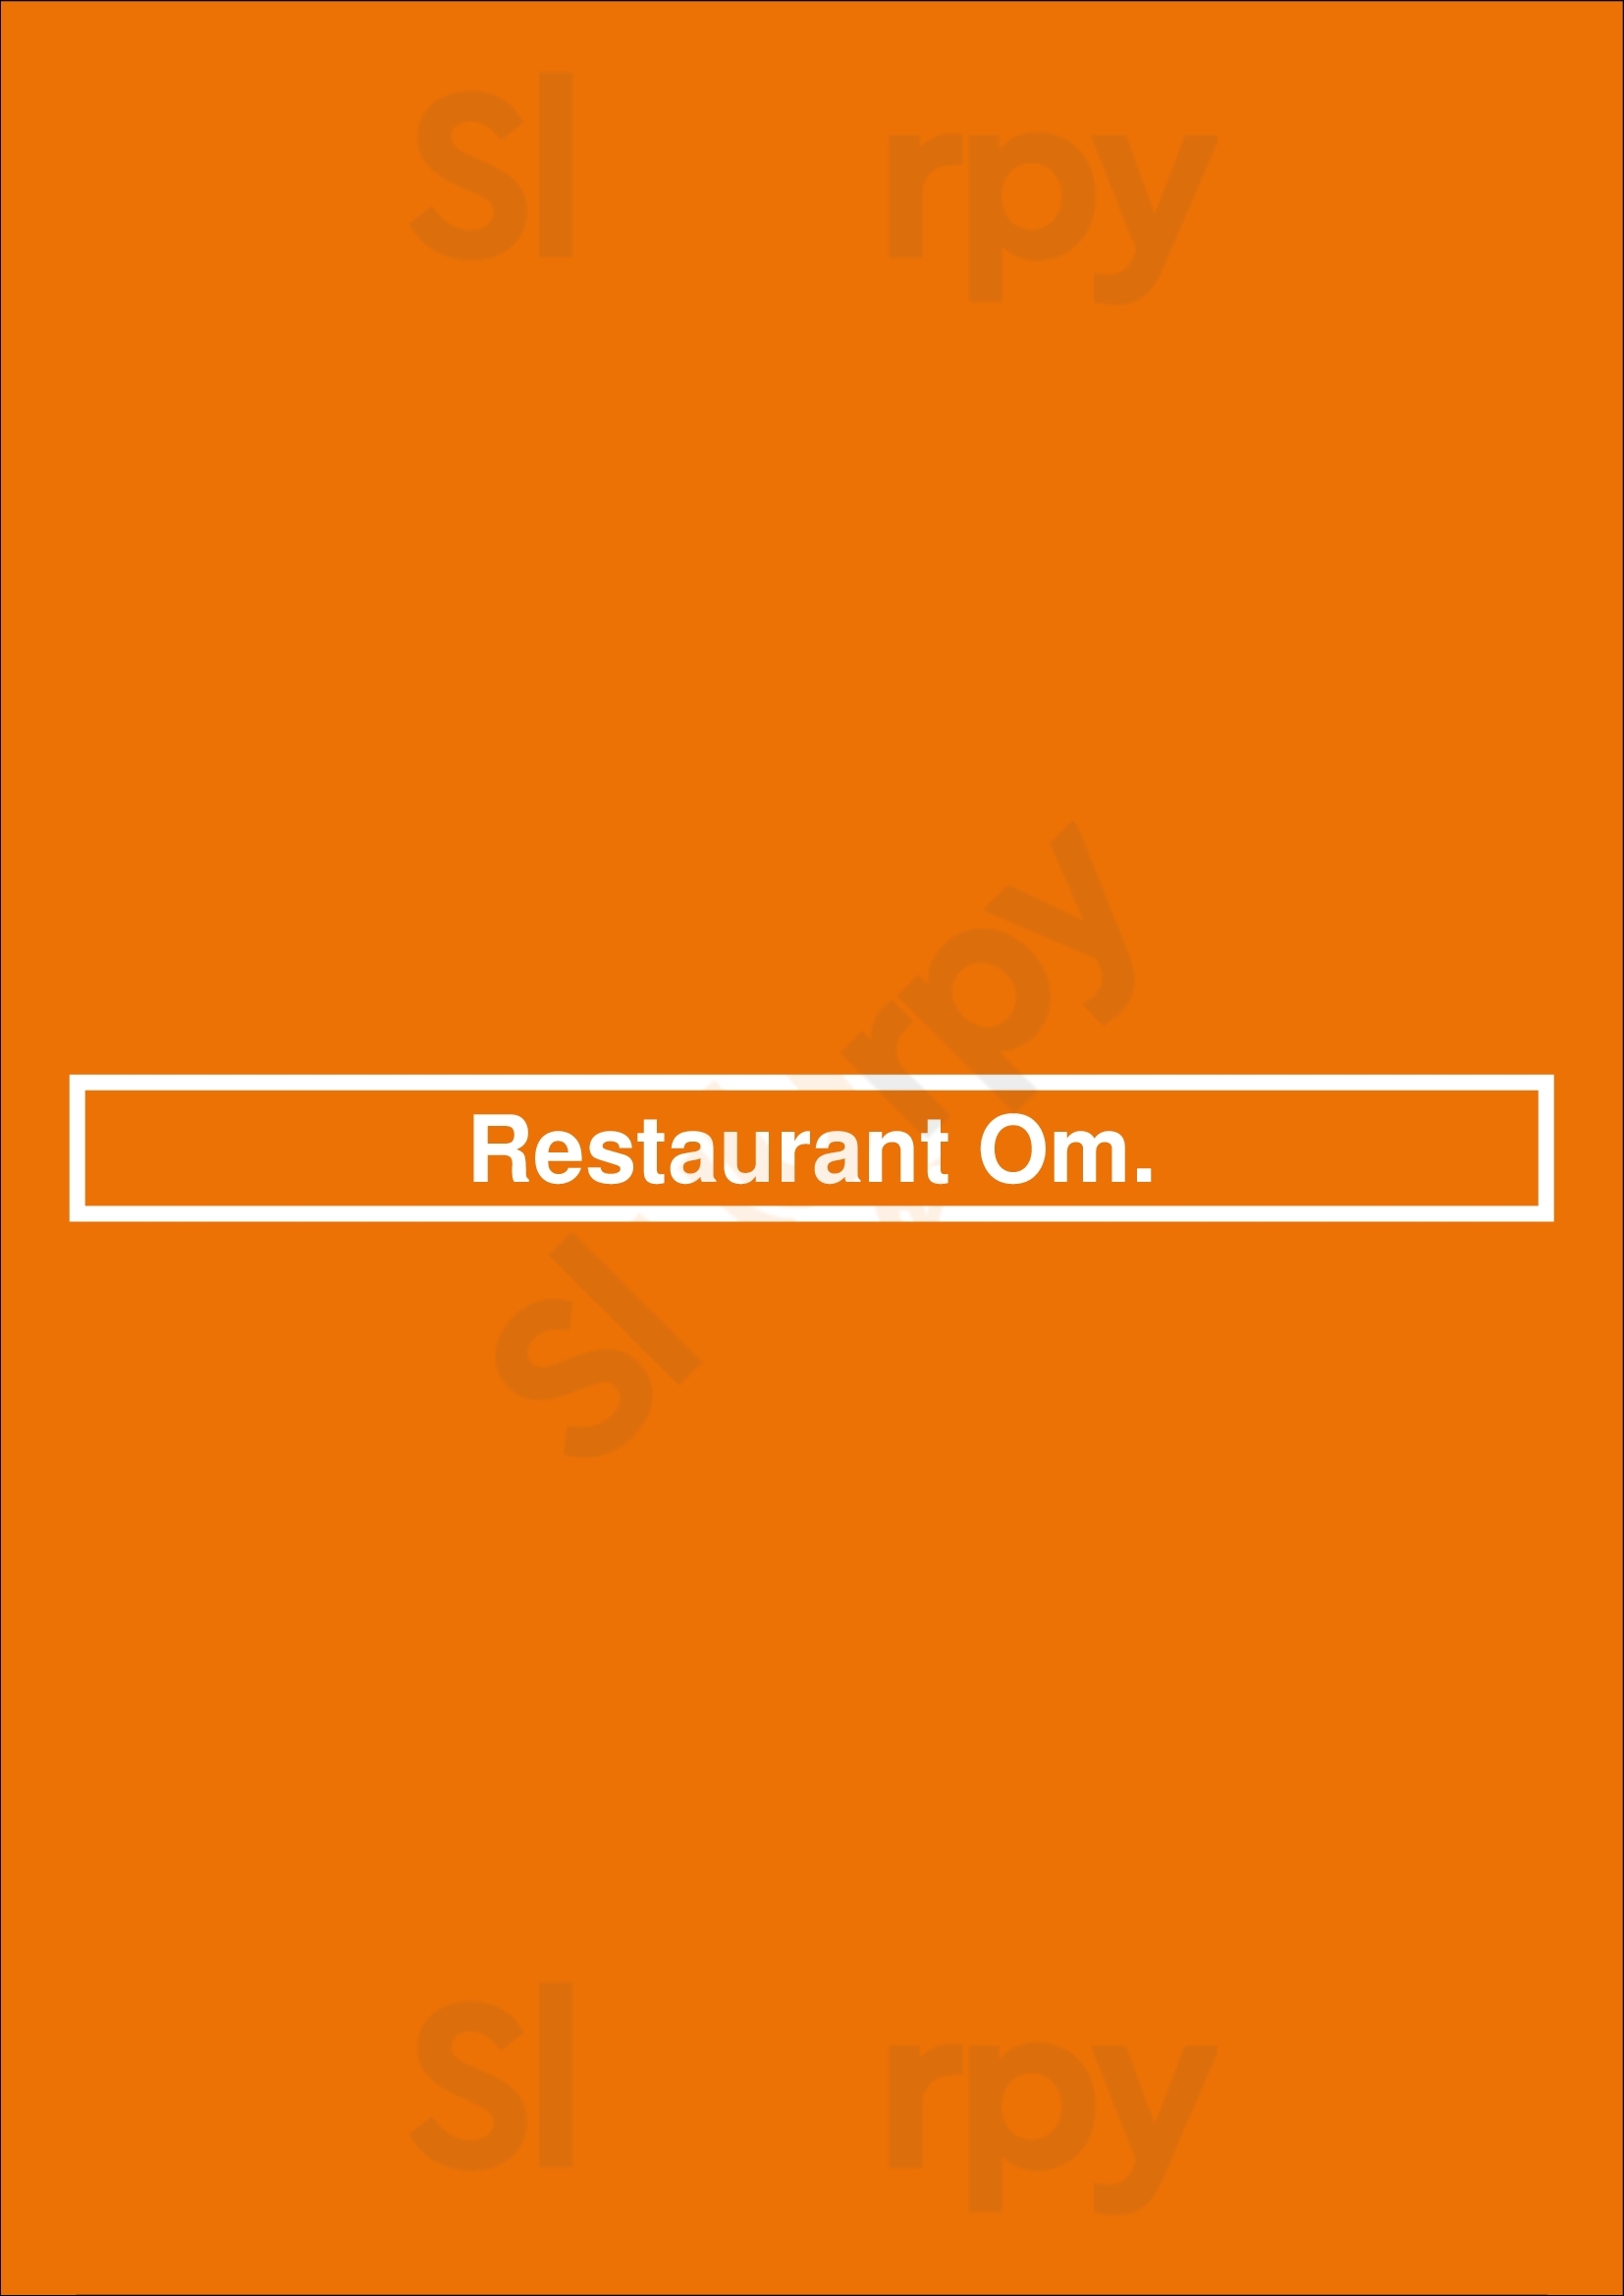 Restaurant Om. Girona Menu - 1